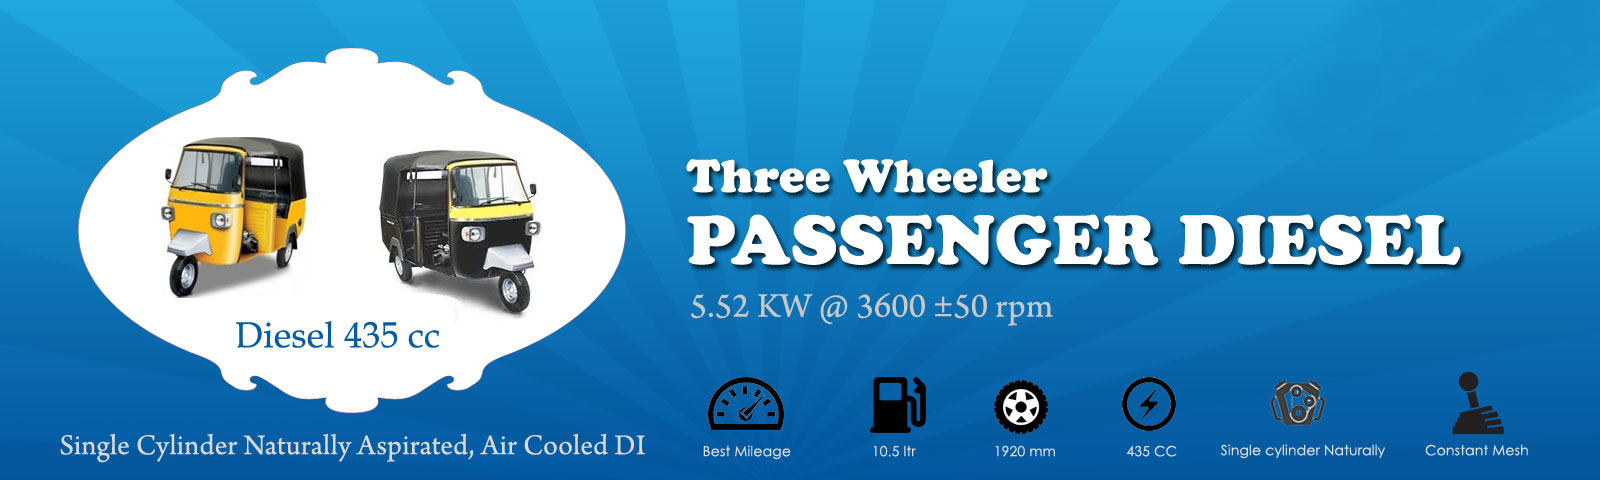 banner_Three-Wheeler-Passenger-Petrol_fleek_motors